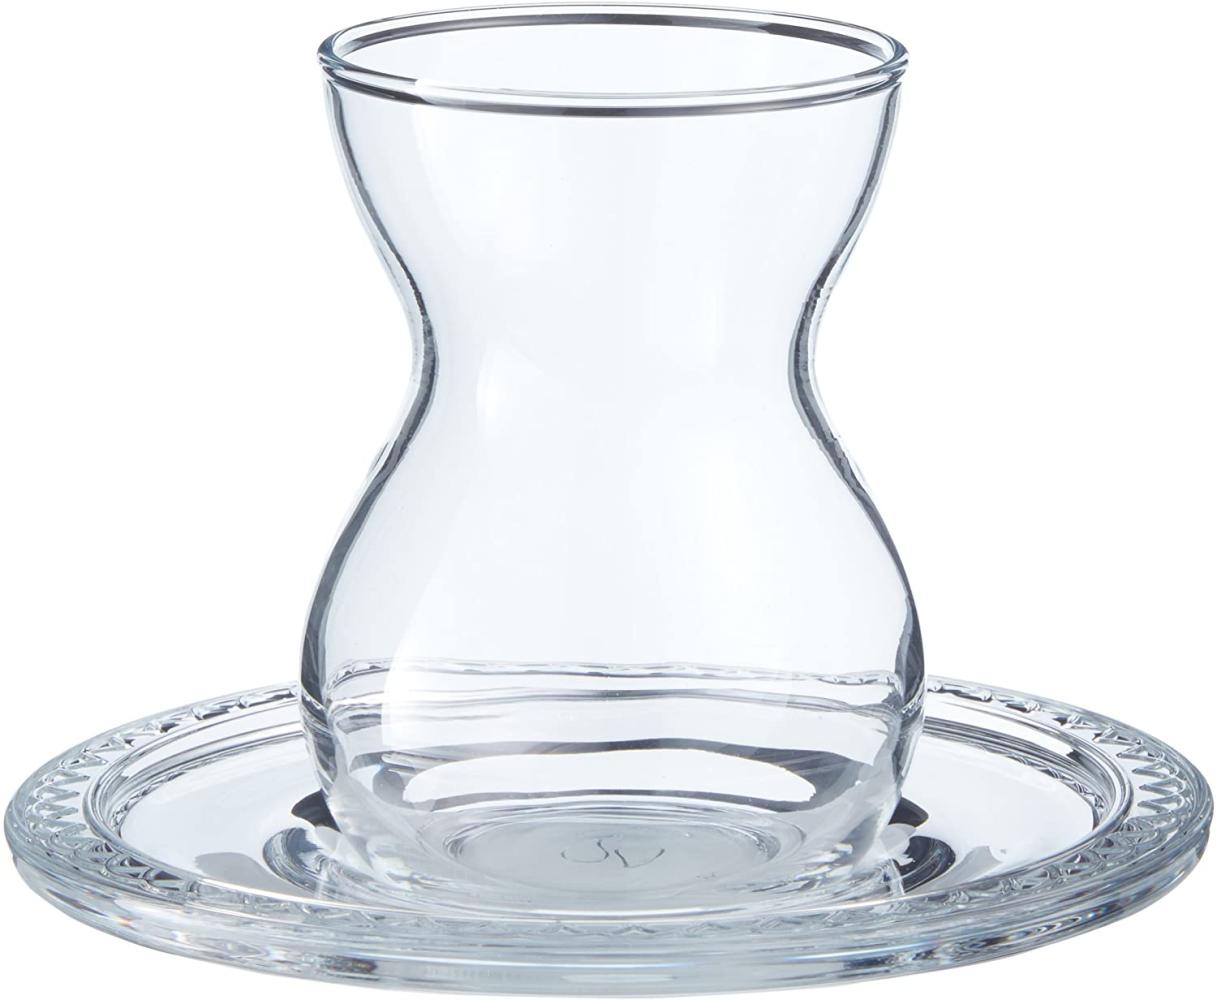 Pasabahce Bekata 12-Teilig Türkische Teegläser-Set mit Untertassen 12 ml Cay Bardagi Teeglas transparent Bild 1